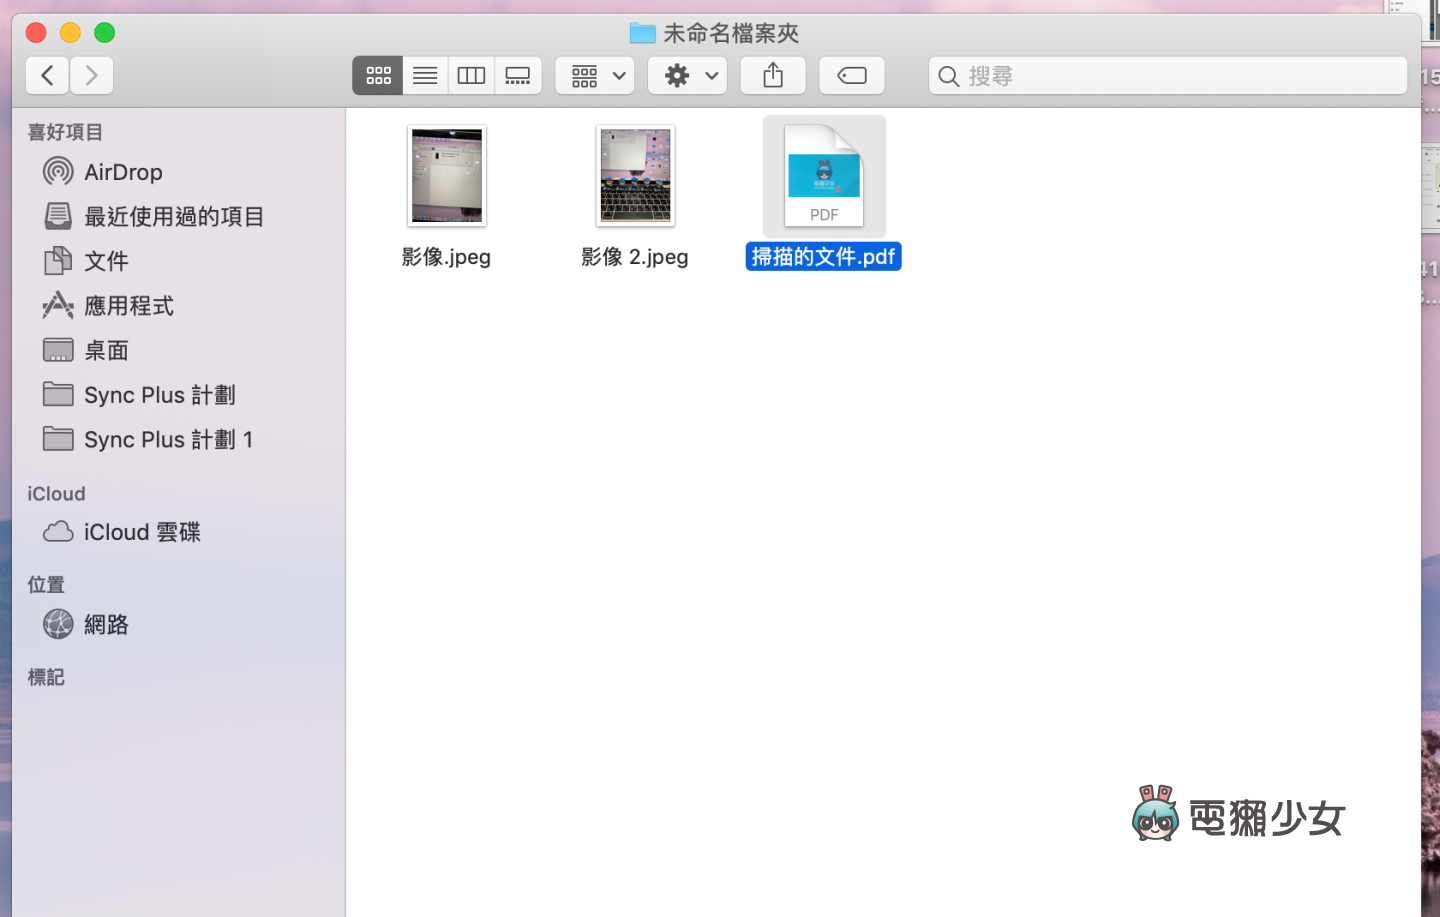 iPhone 拍照、掃描直接匯入 Mac！Airdrop 傳檔步驟都省下來！教你『 接續互通相機 』功能怎麼使用！